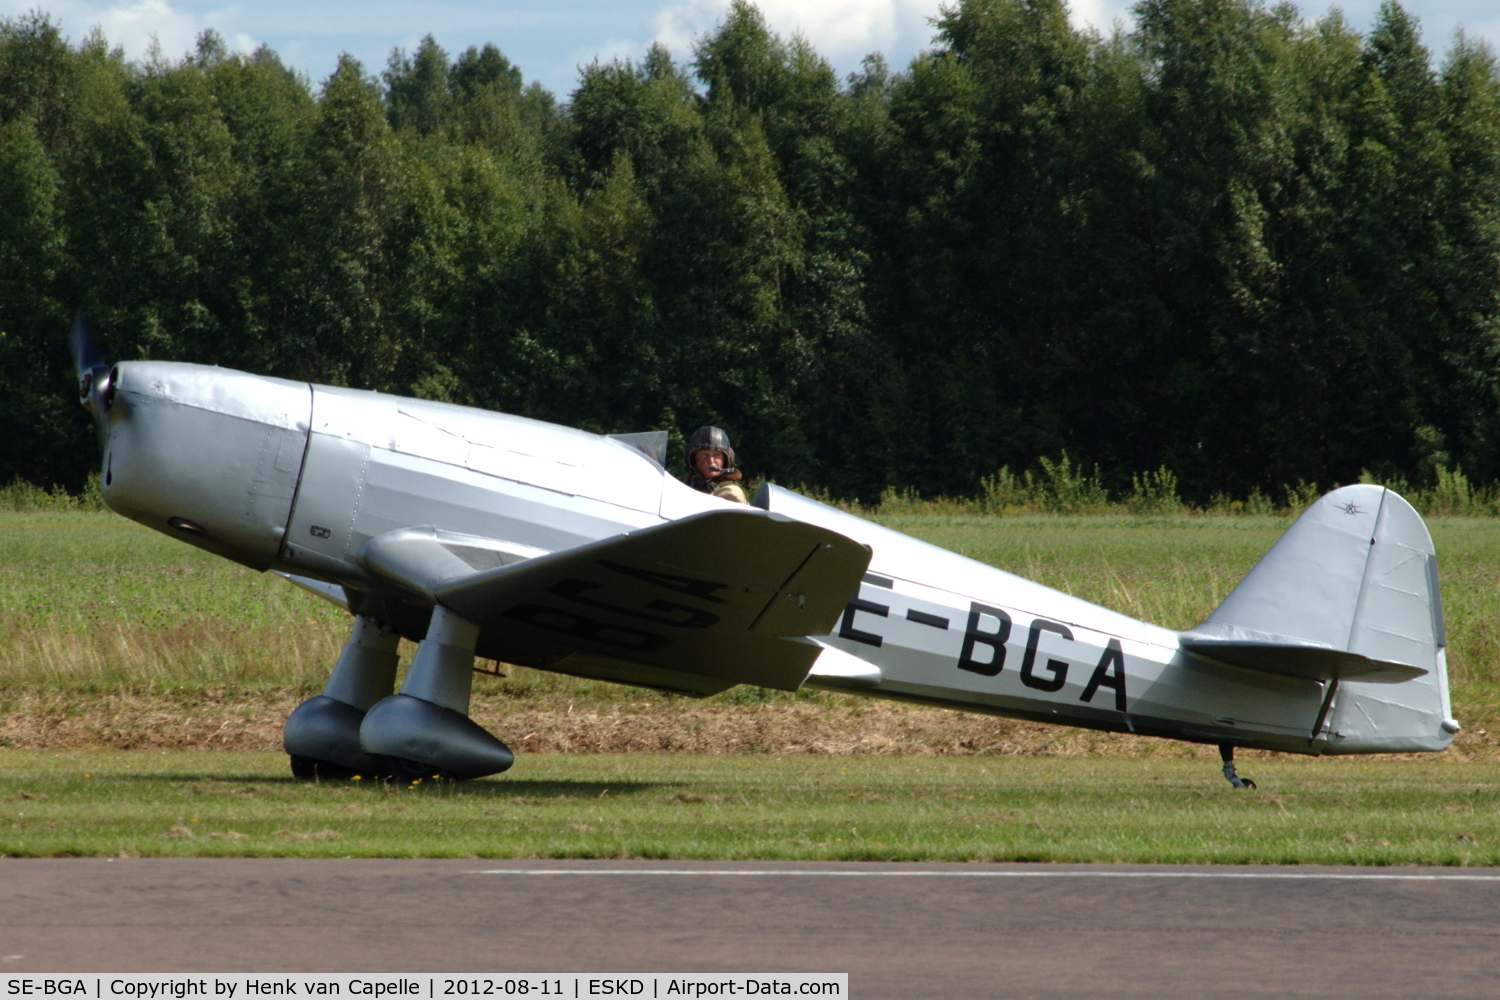 SE-BGA, 1940 Klemm Kl-35D C/N 1983-1297, Klemm Kl 35D landing on the grass at Dala-Järna airfield, Sweden.